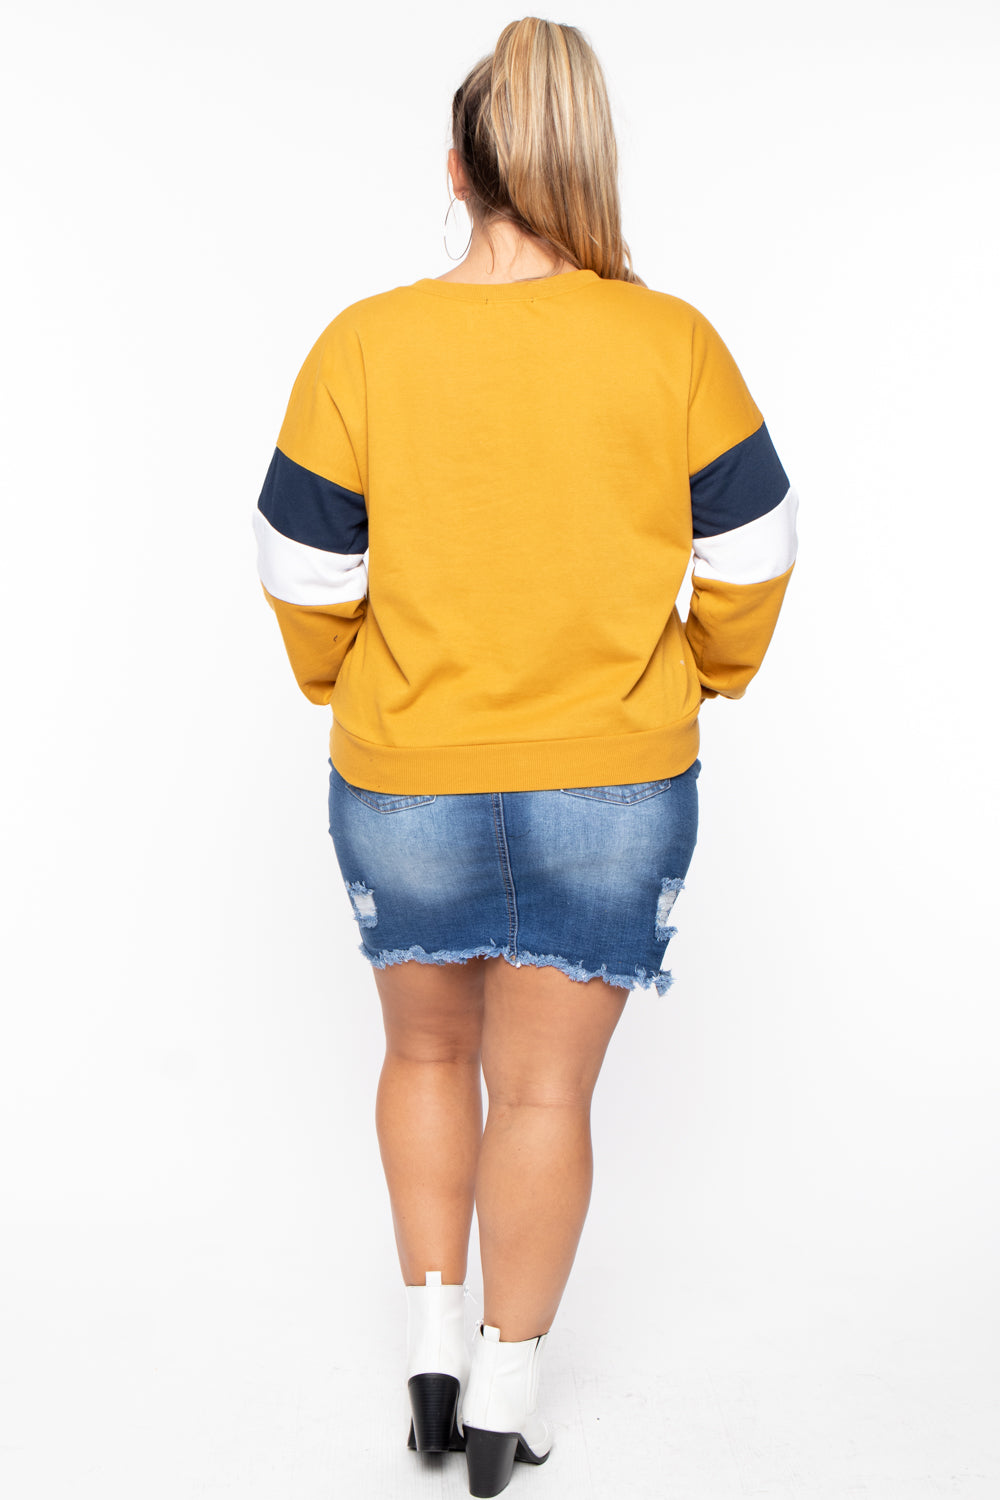 Ambiance Sweaters & Cardigans Plus Size Colorblock Sweatshirt - Mustard